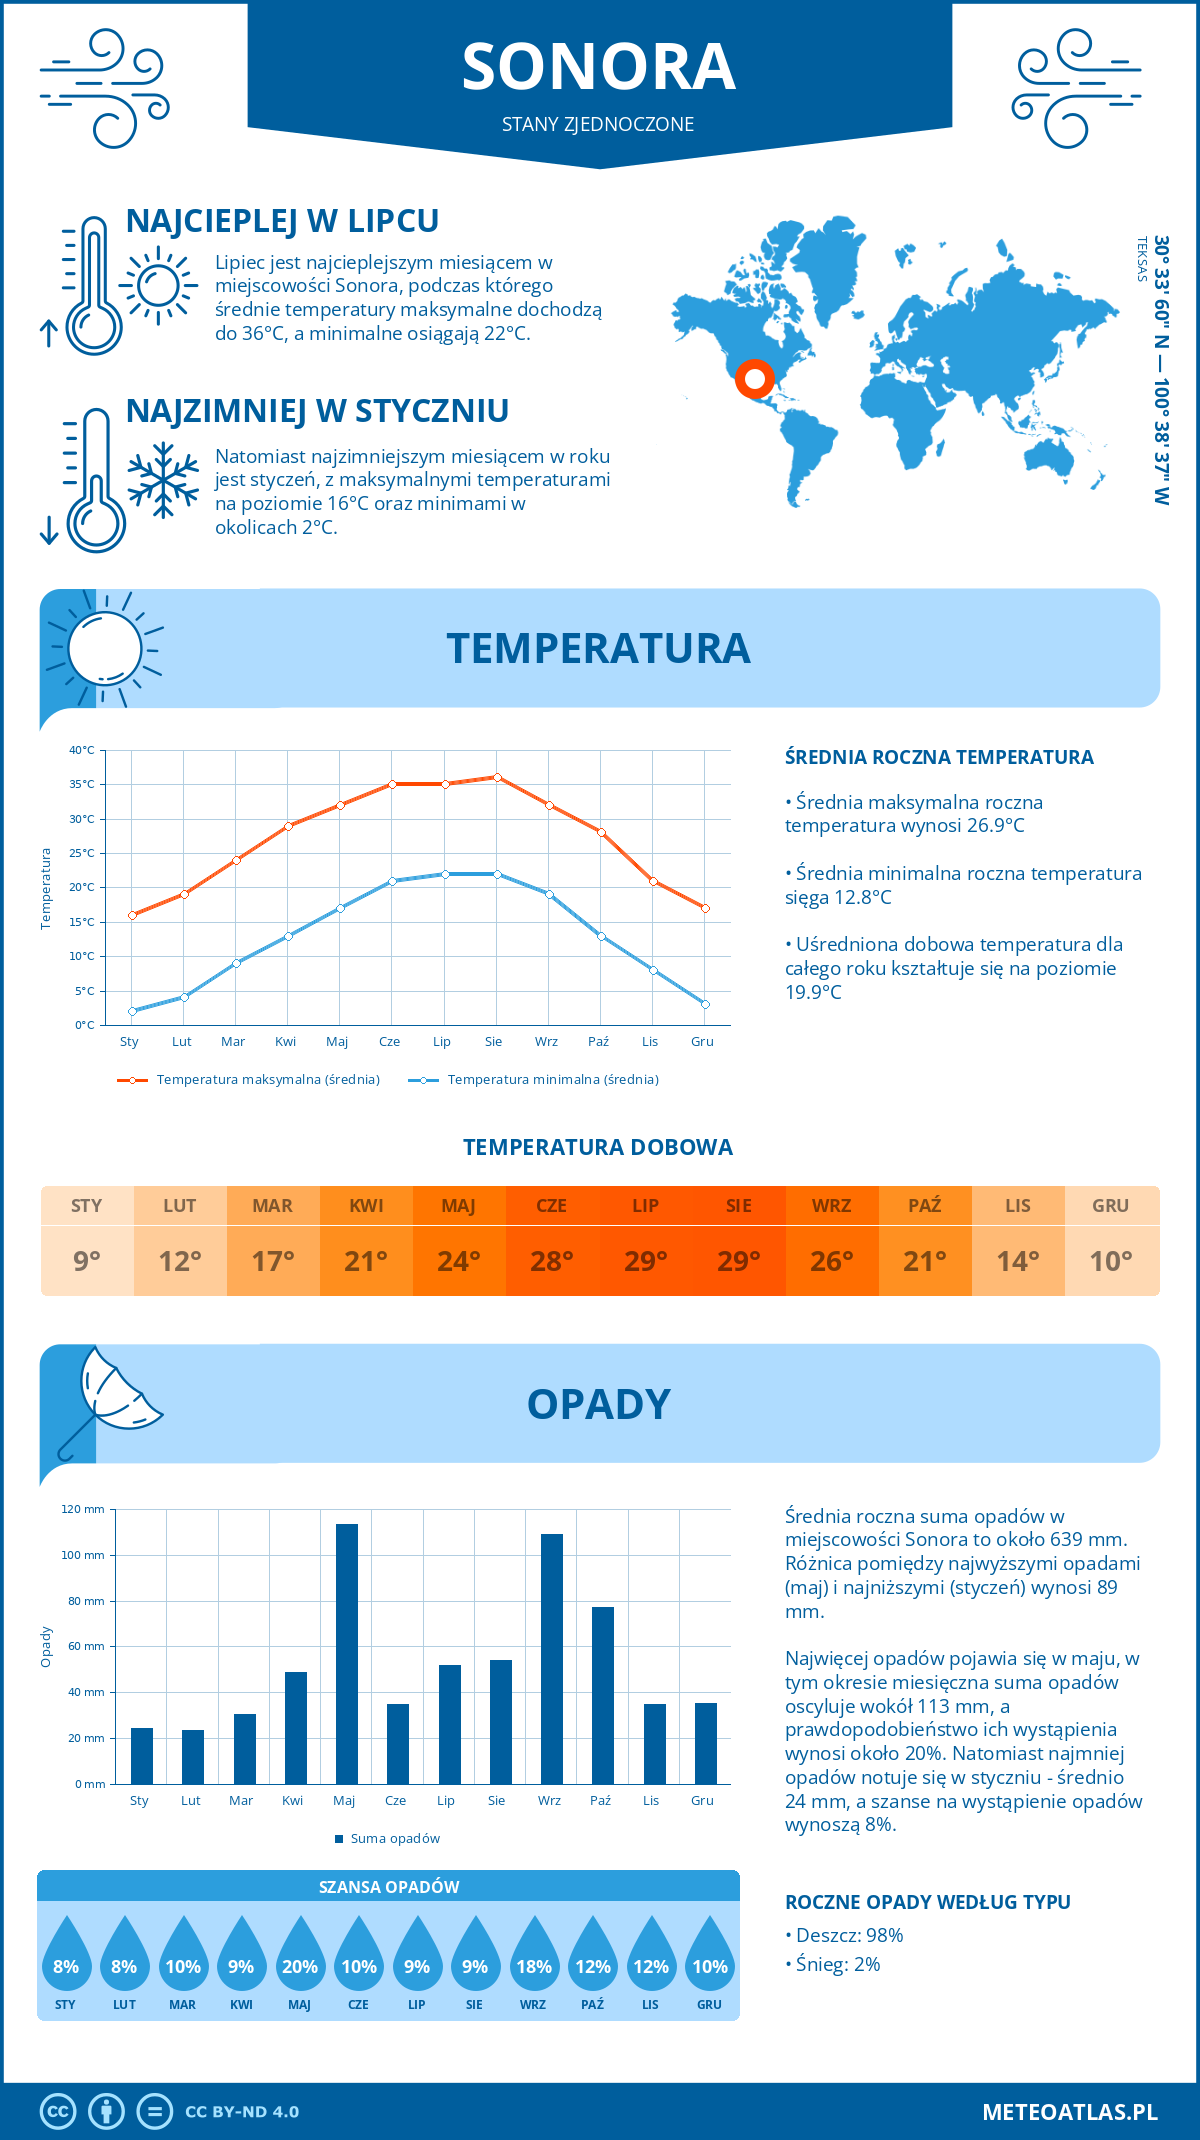 Pogoda Sonora (Stany Zjednoczone). Temperatura oraz opady.